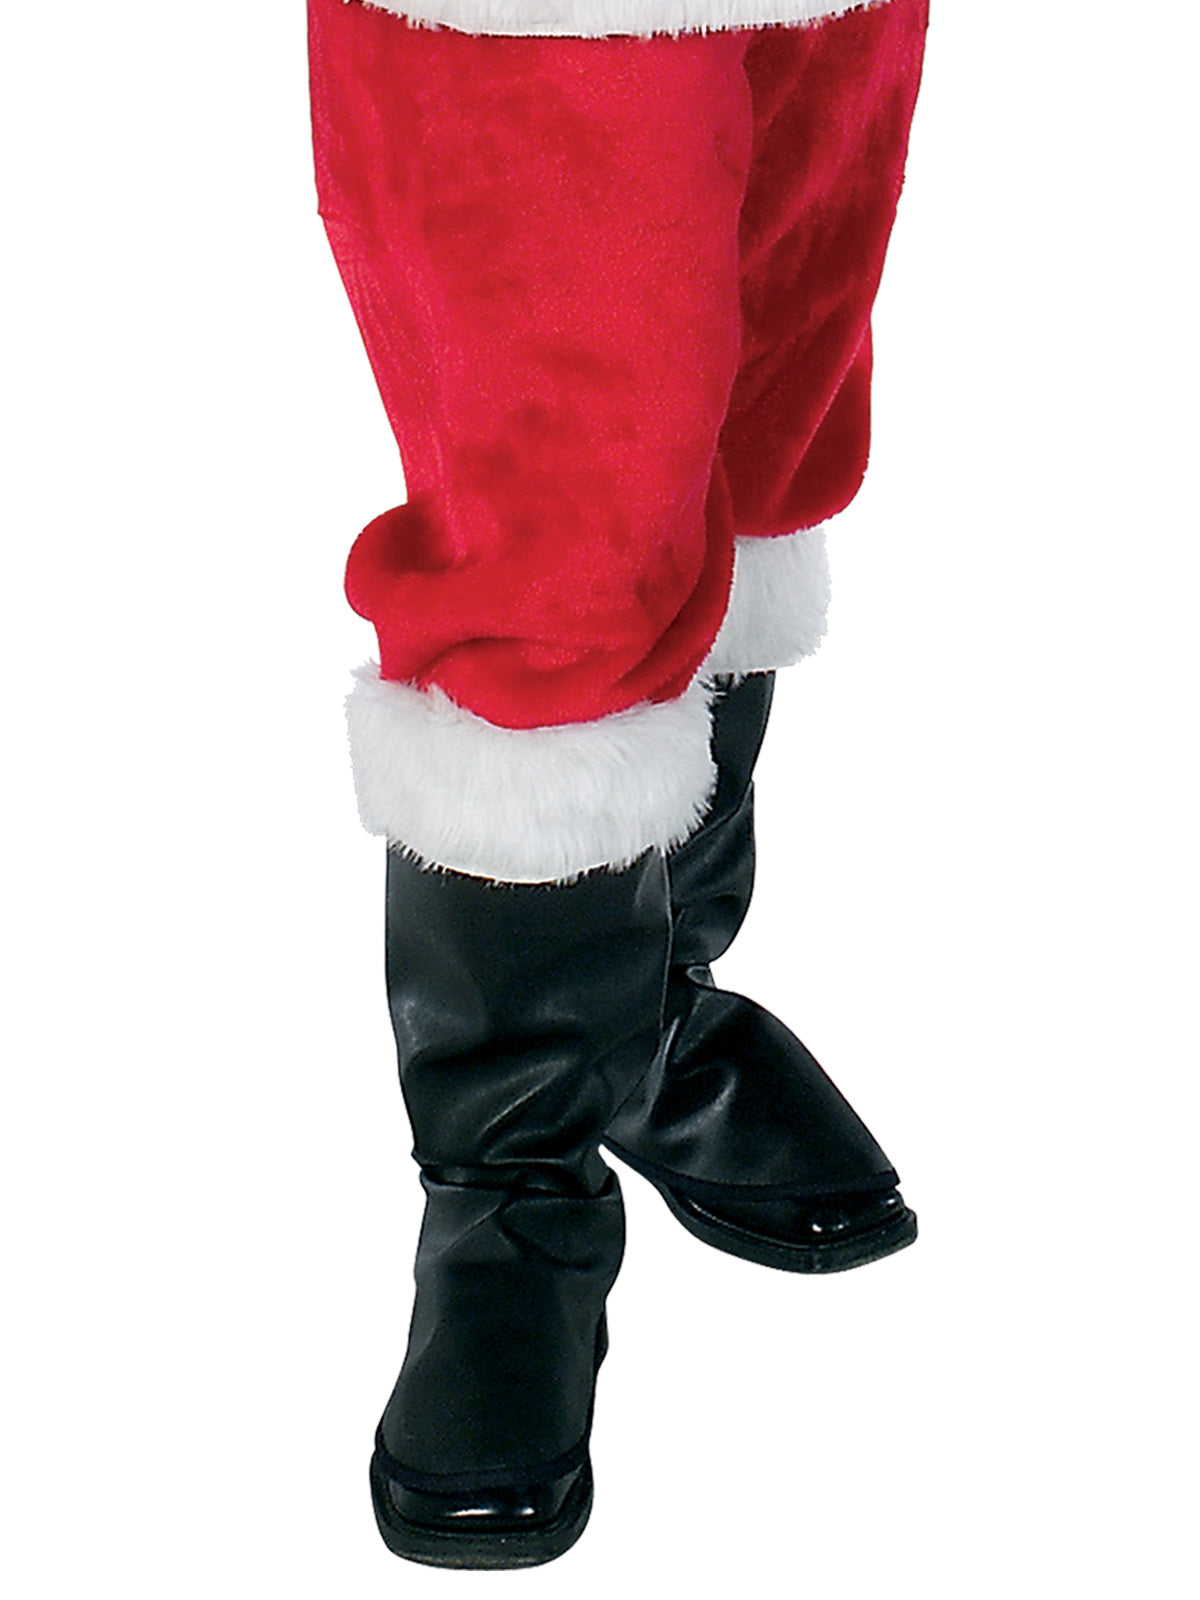 Santa Suit Deluxe 12 Piece Complete Costume Adult